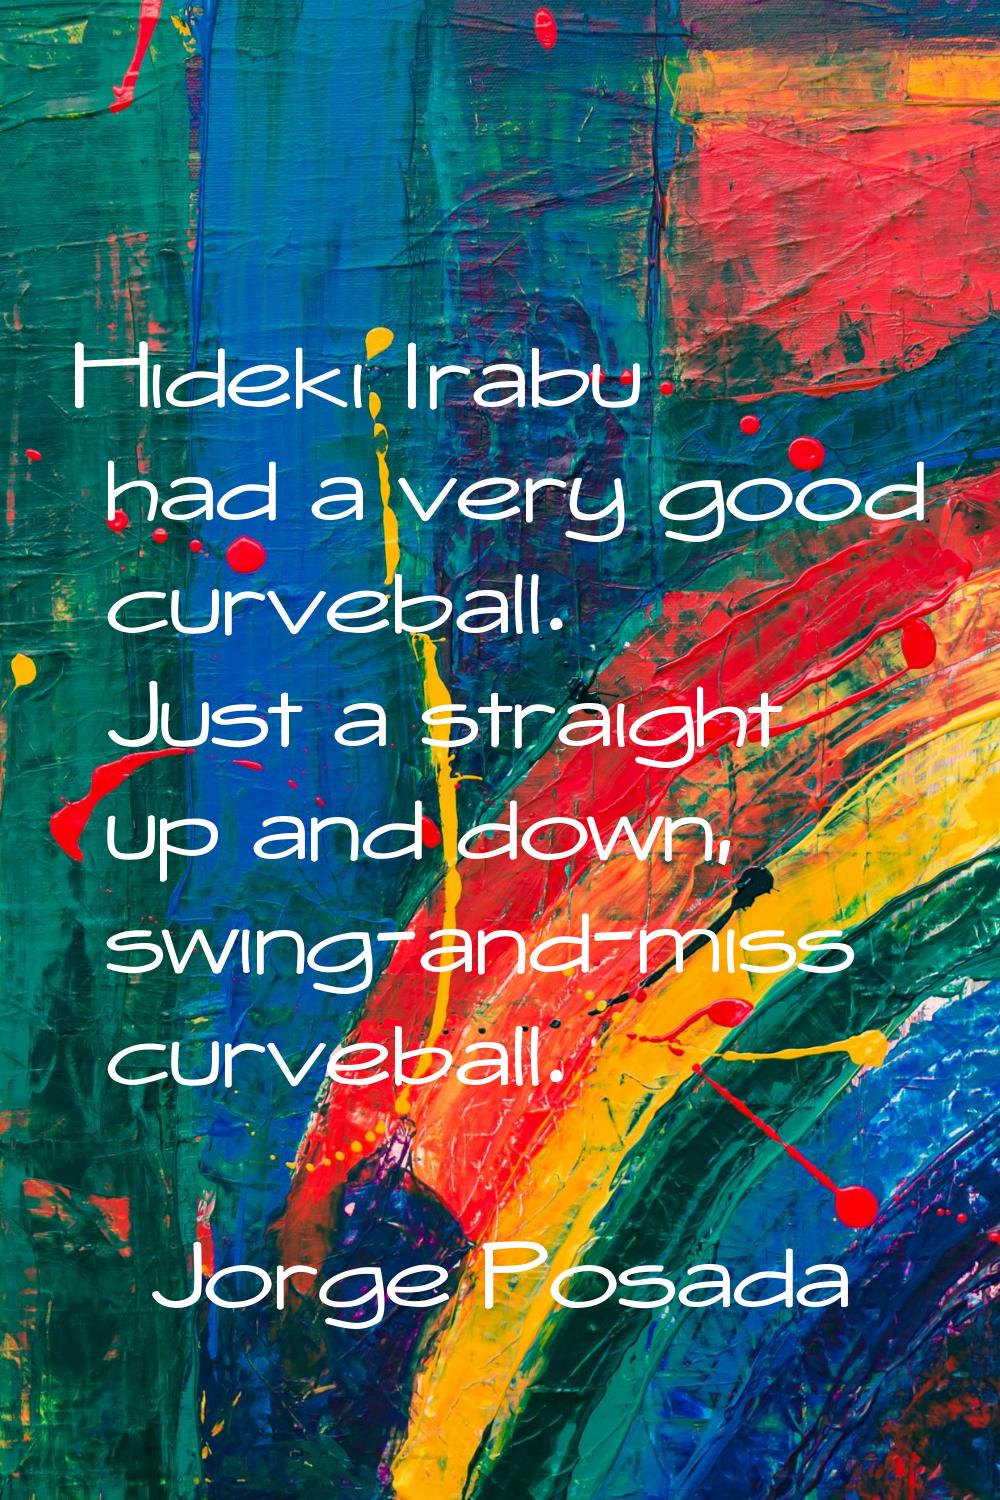 Hideki Irabu had a very good curveball. Just a straight up and down, swing-and-miss curveball.